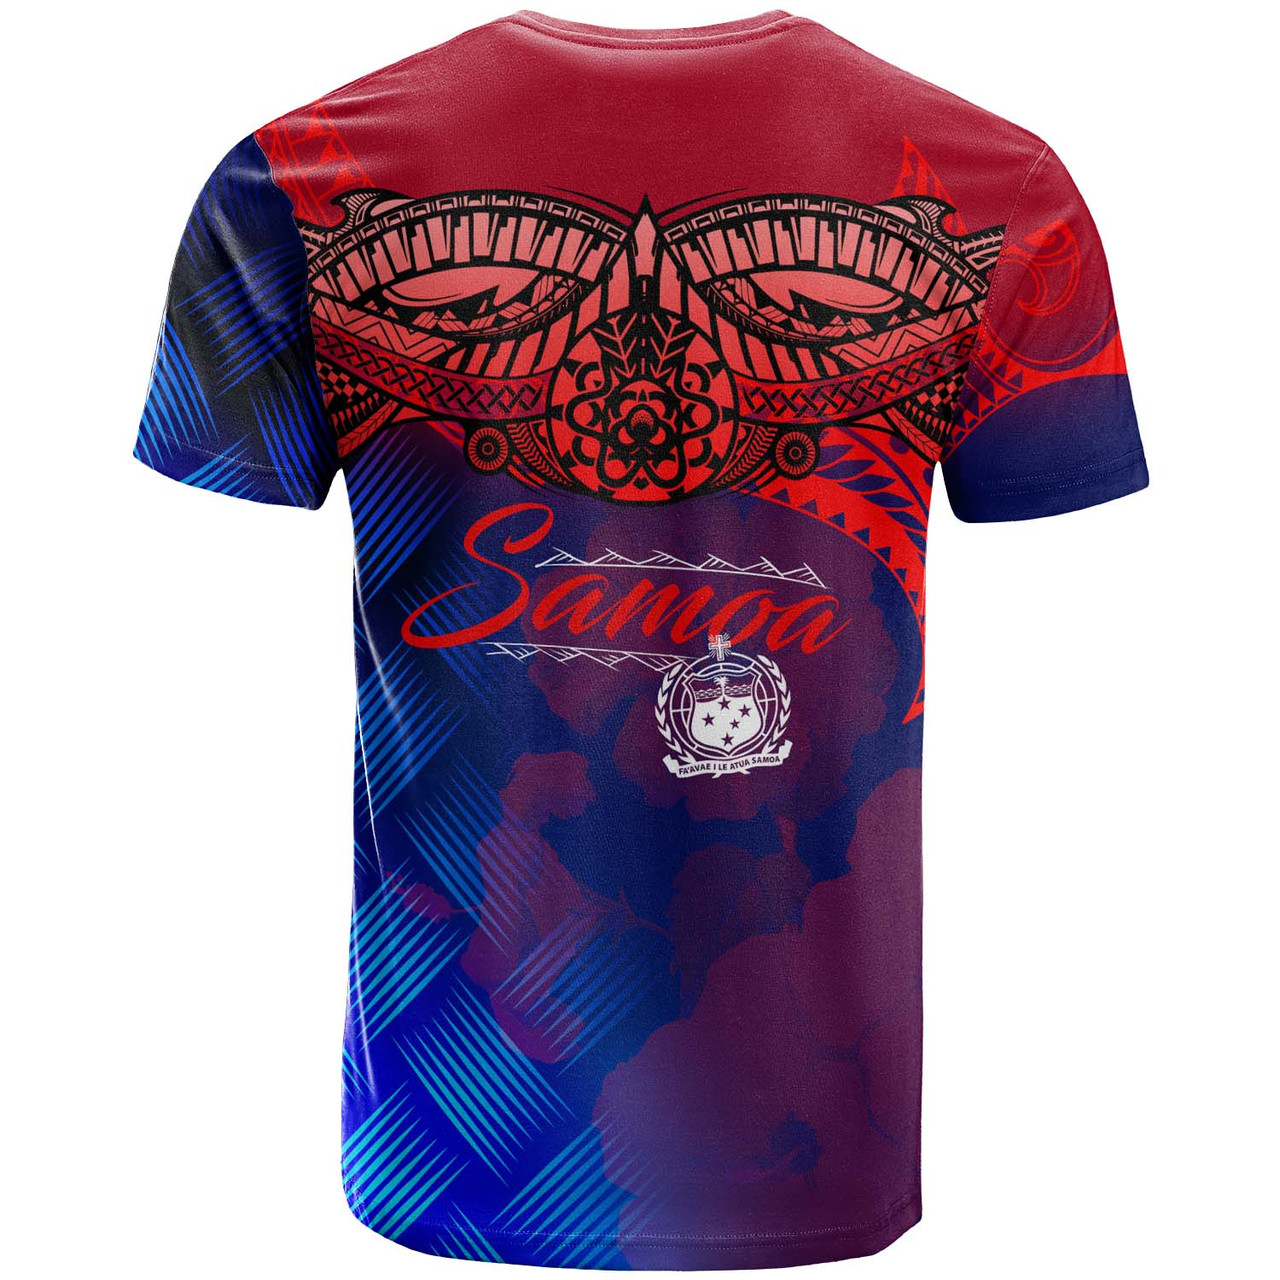 Samoa Polynesian T-Shirt - Samoa Coat Of Arms with Lauhala Tribal Pattern